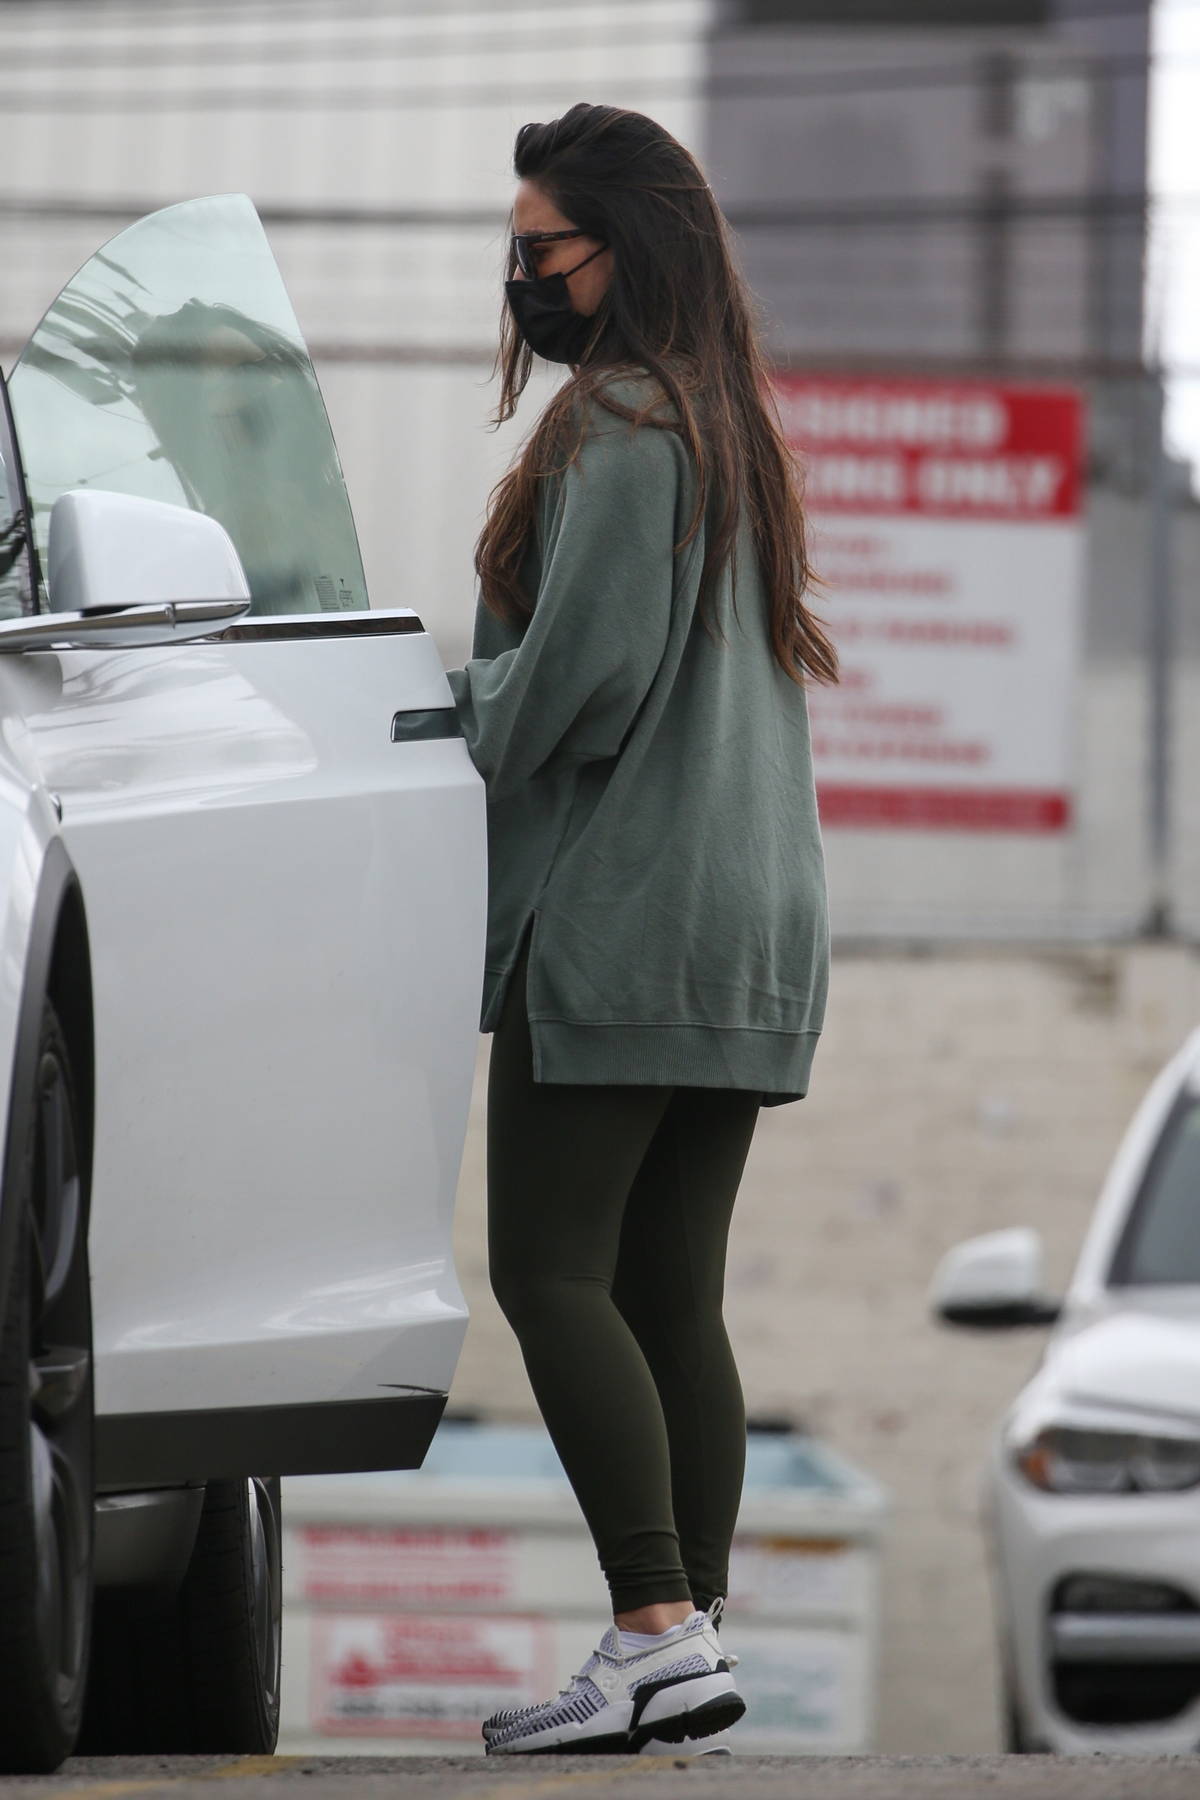 Olivia Munn seen leaving the gym wearing an oversized sweatshirt